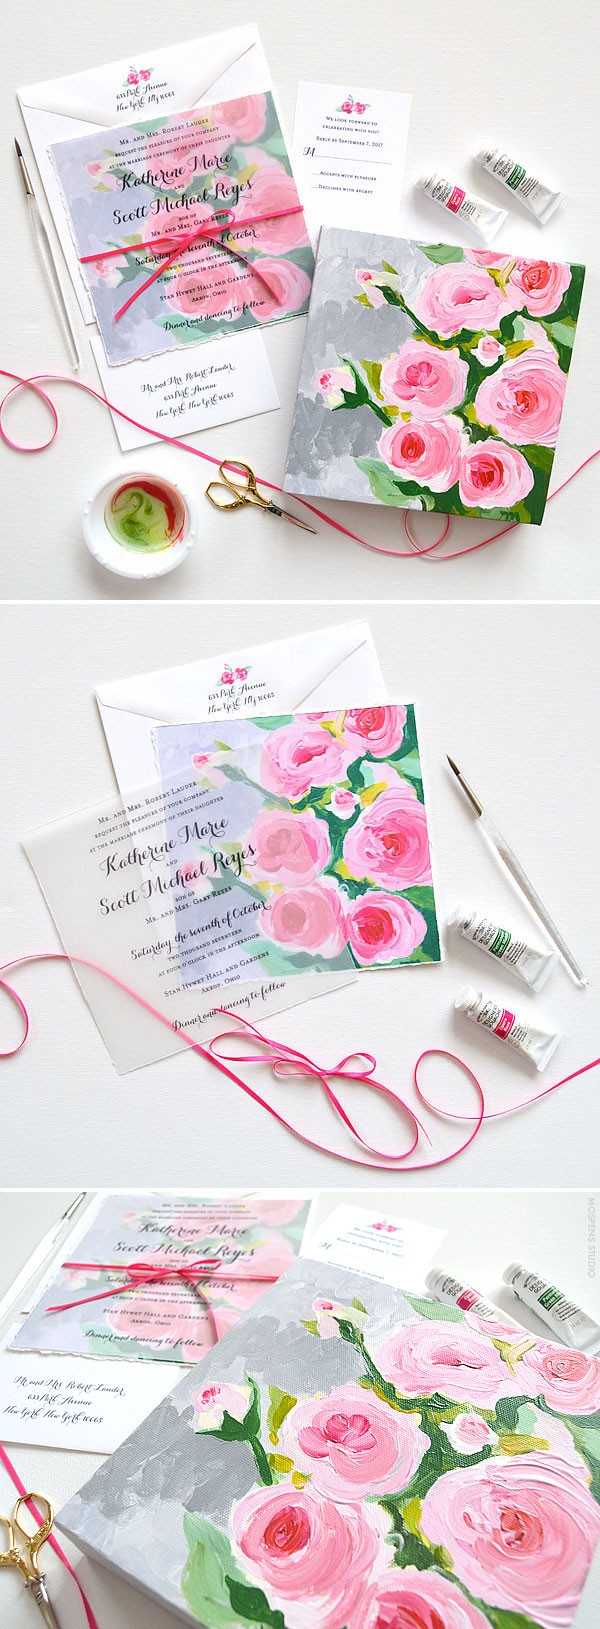 Hand painted fine art floral wedding invitations - www.mospensstudio.com